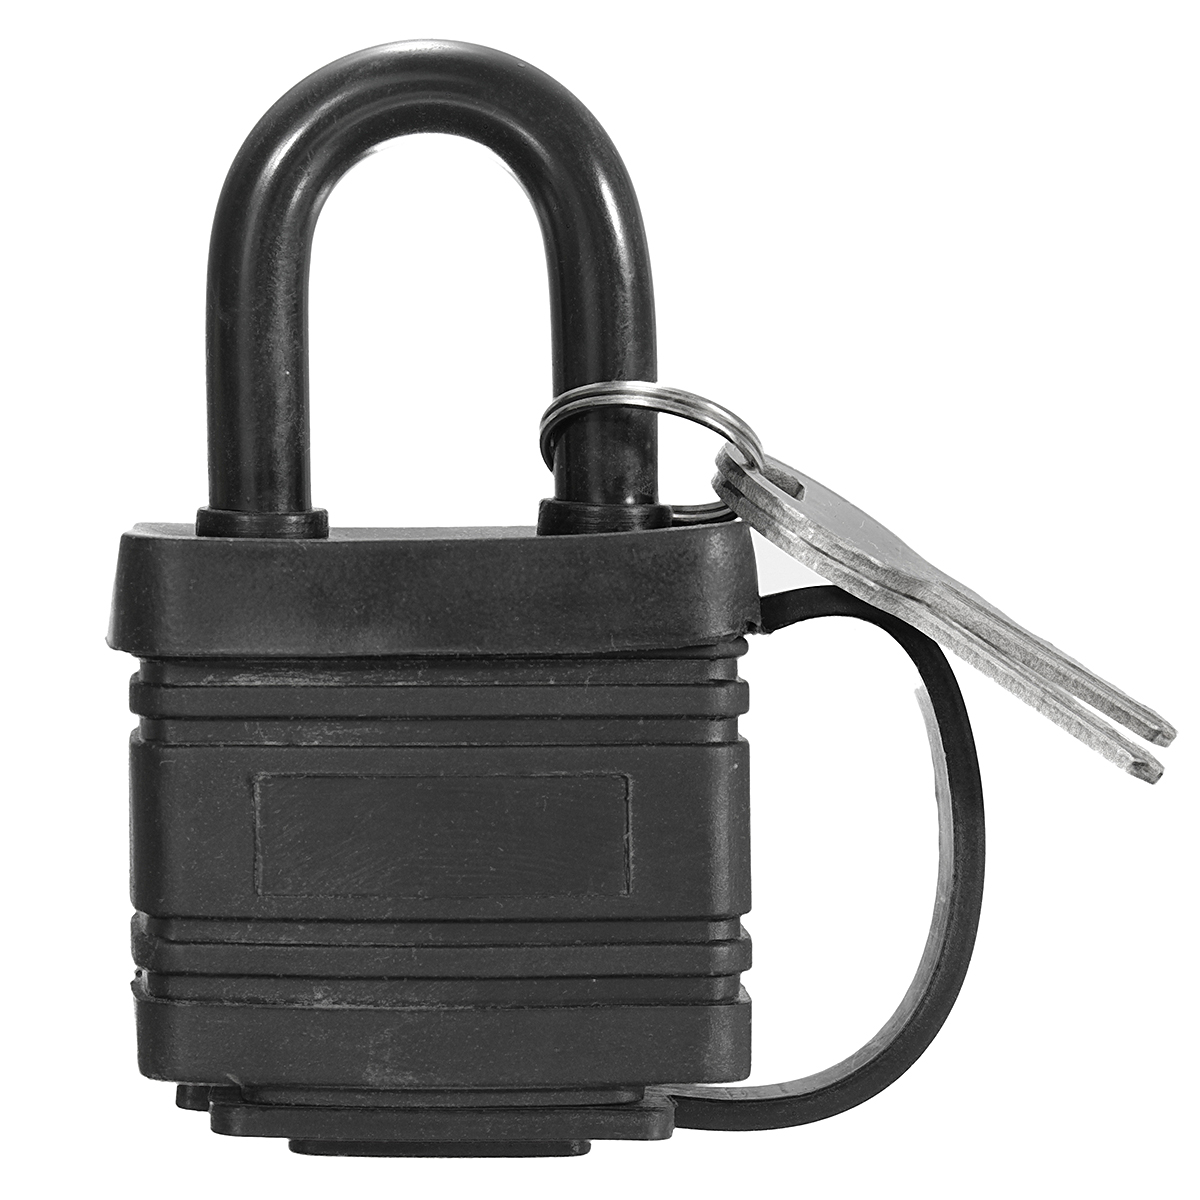 

40mm Iron Padlock Waterproof Heavy Duty Outdoor Security Shackle Lock with 2 Keys